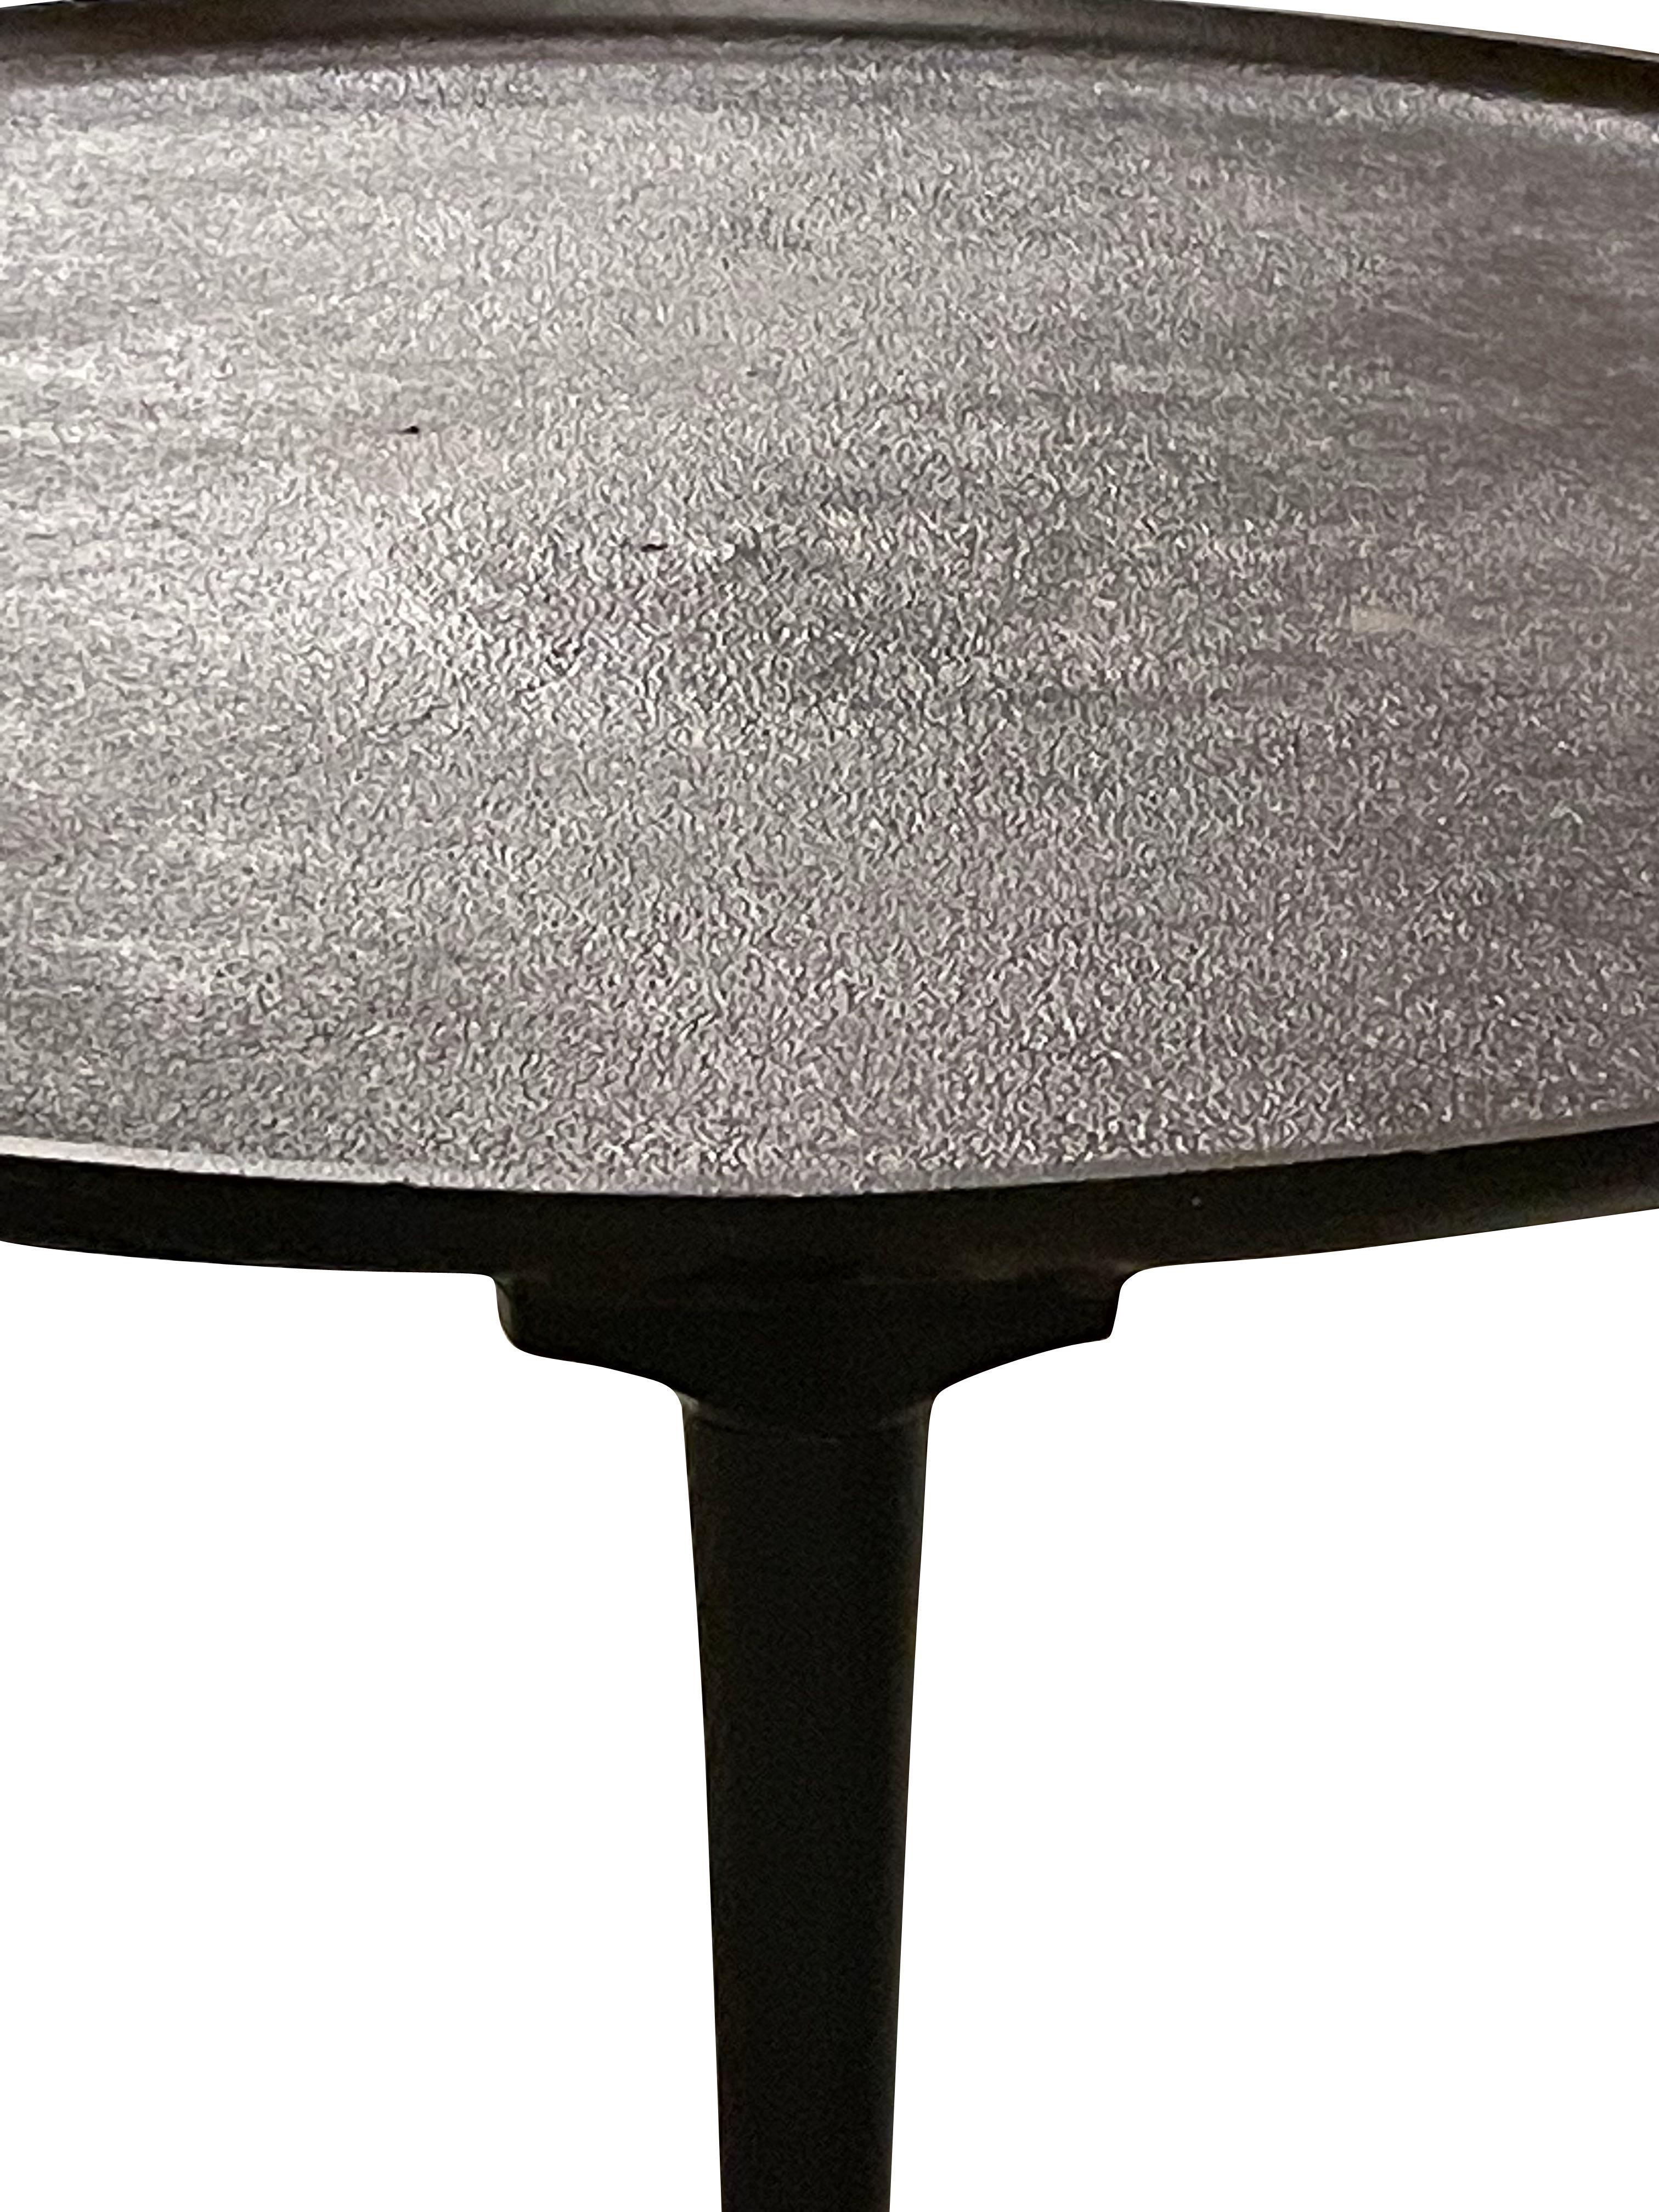 black iron coffee table